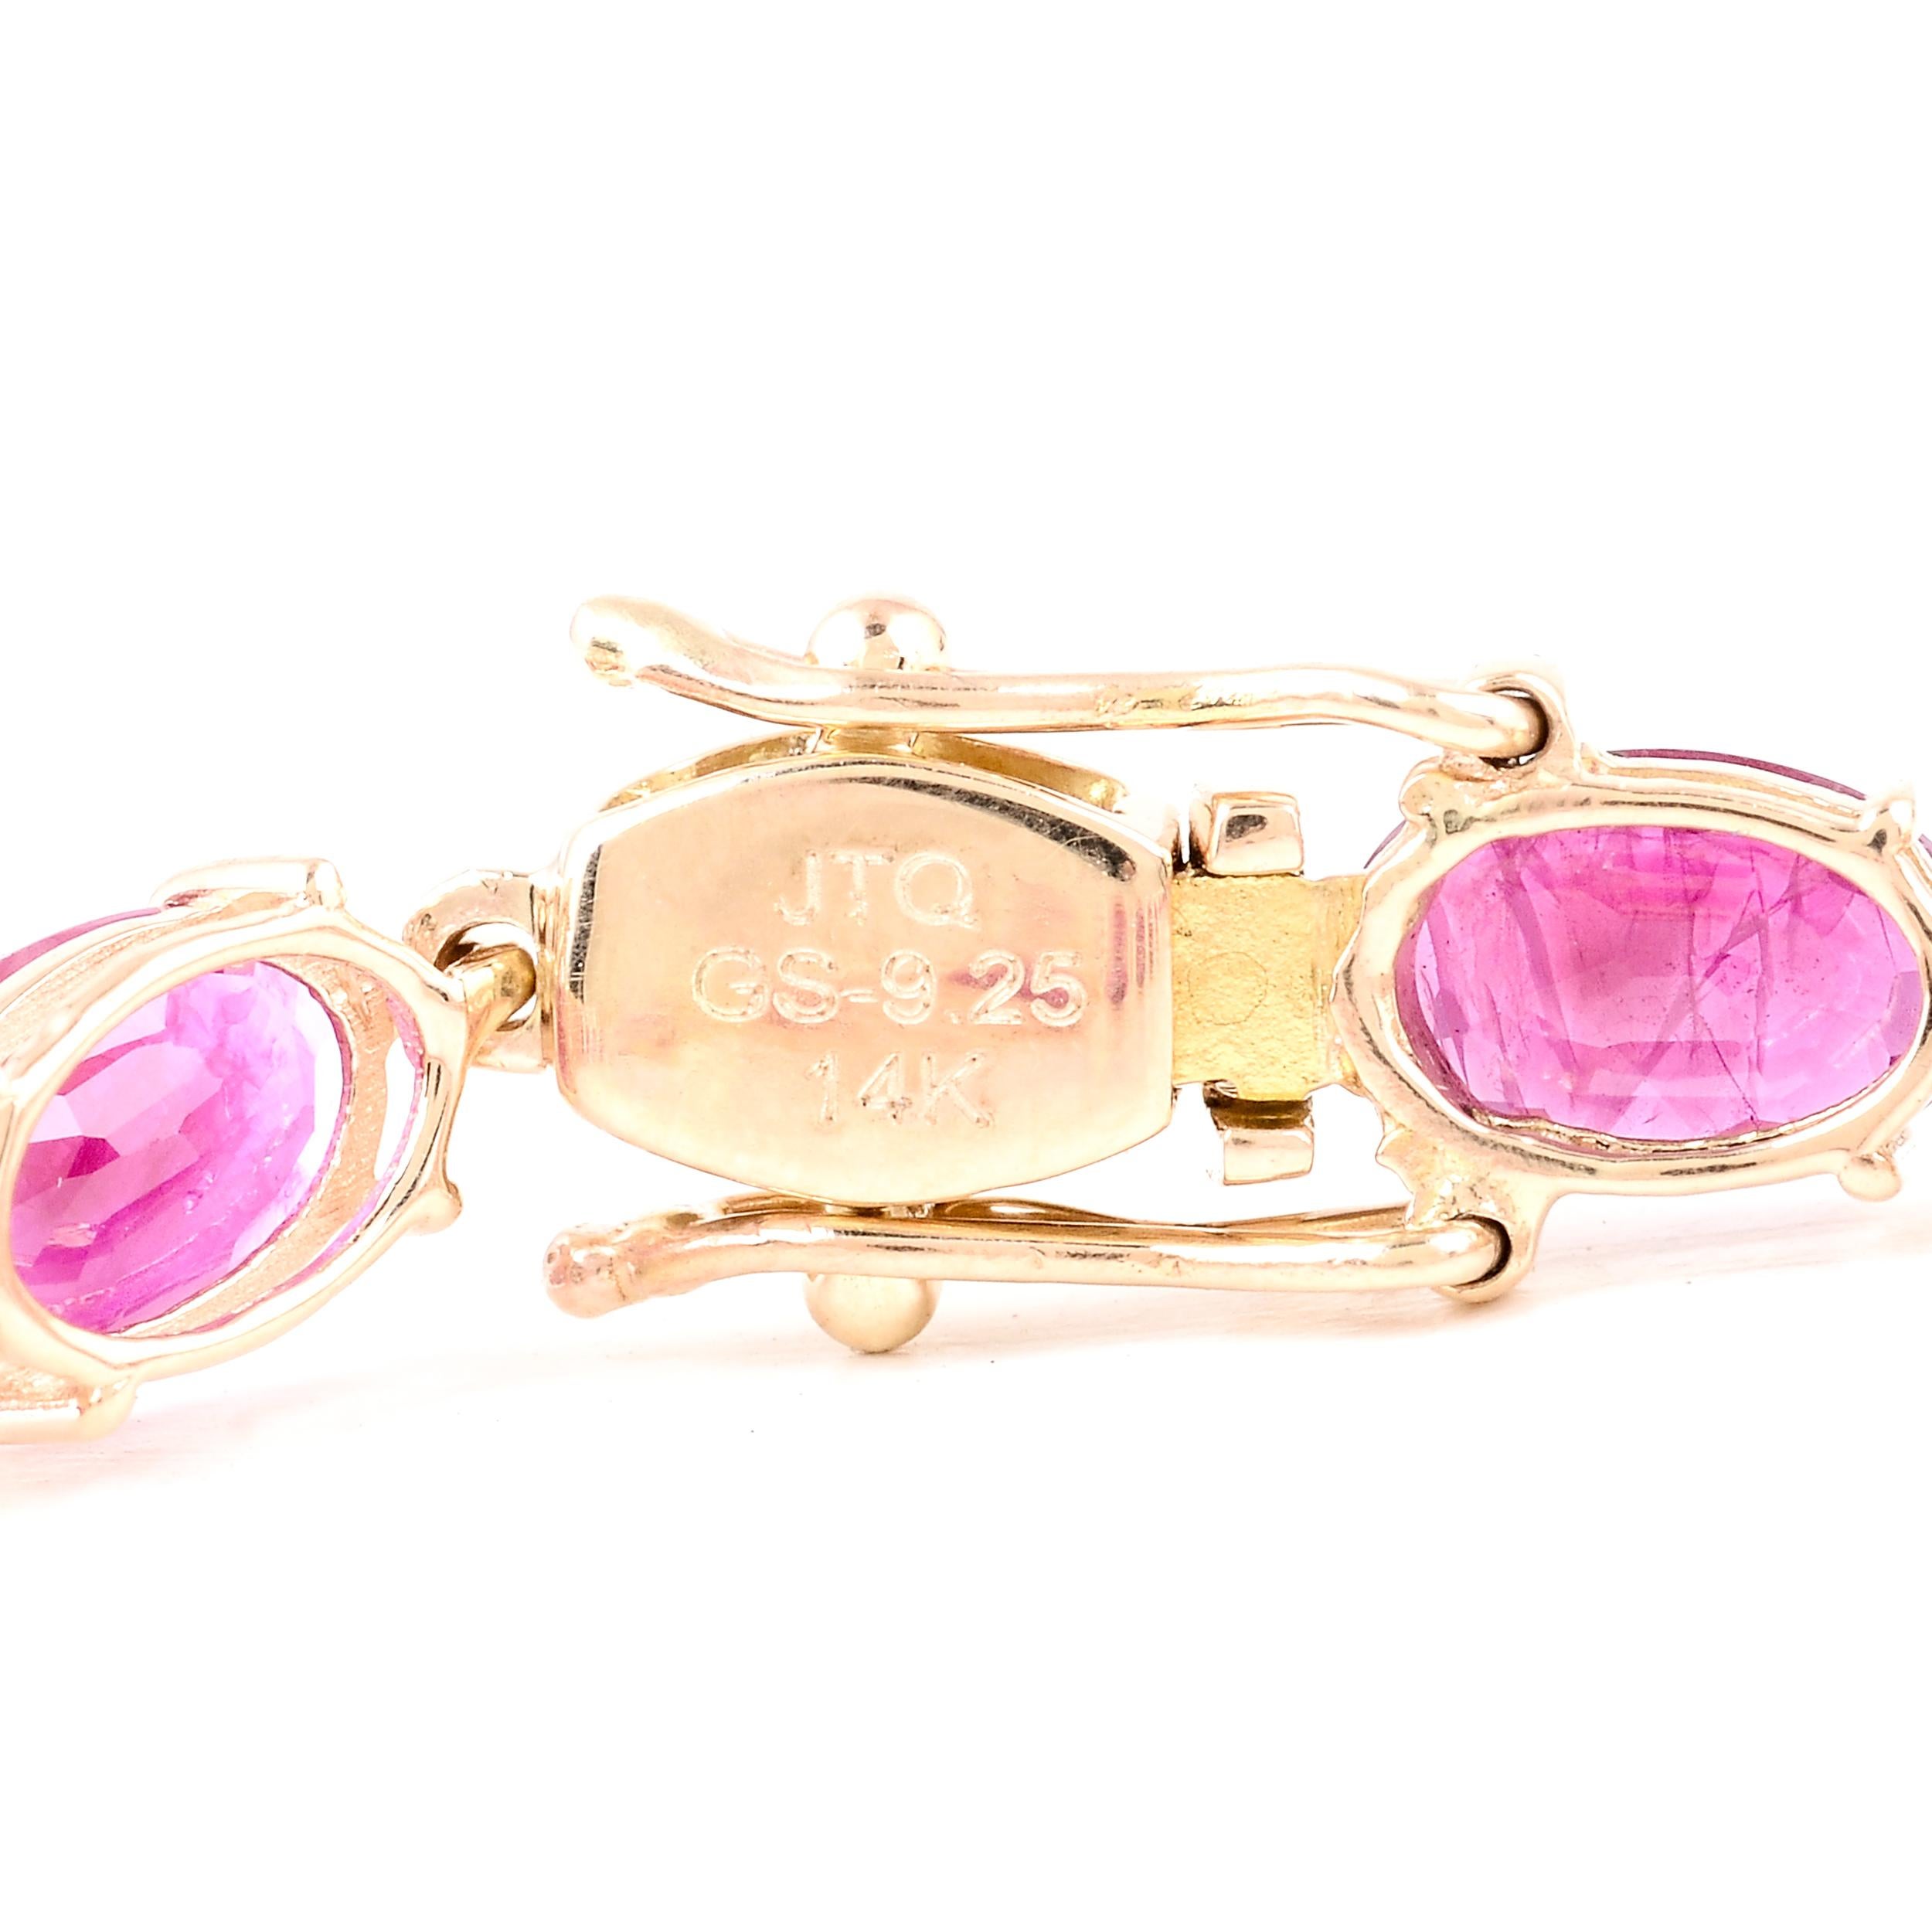 14K 8.40ctw Ruby Link Bracelet - Exquisite Gemstone Elegance, Timeless Luxury For Sale 1